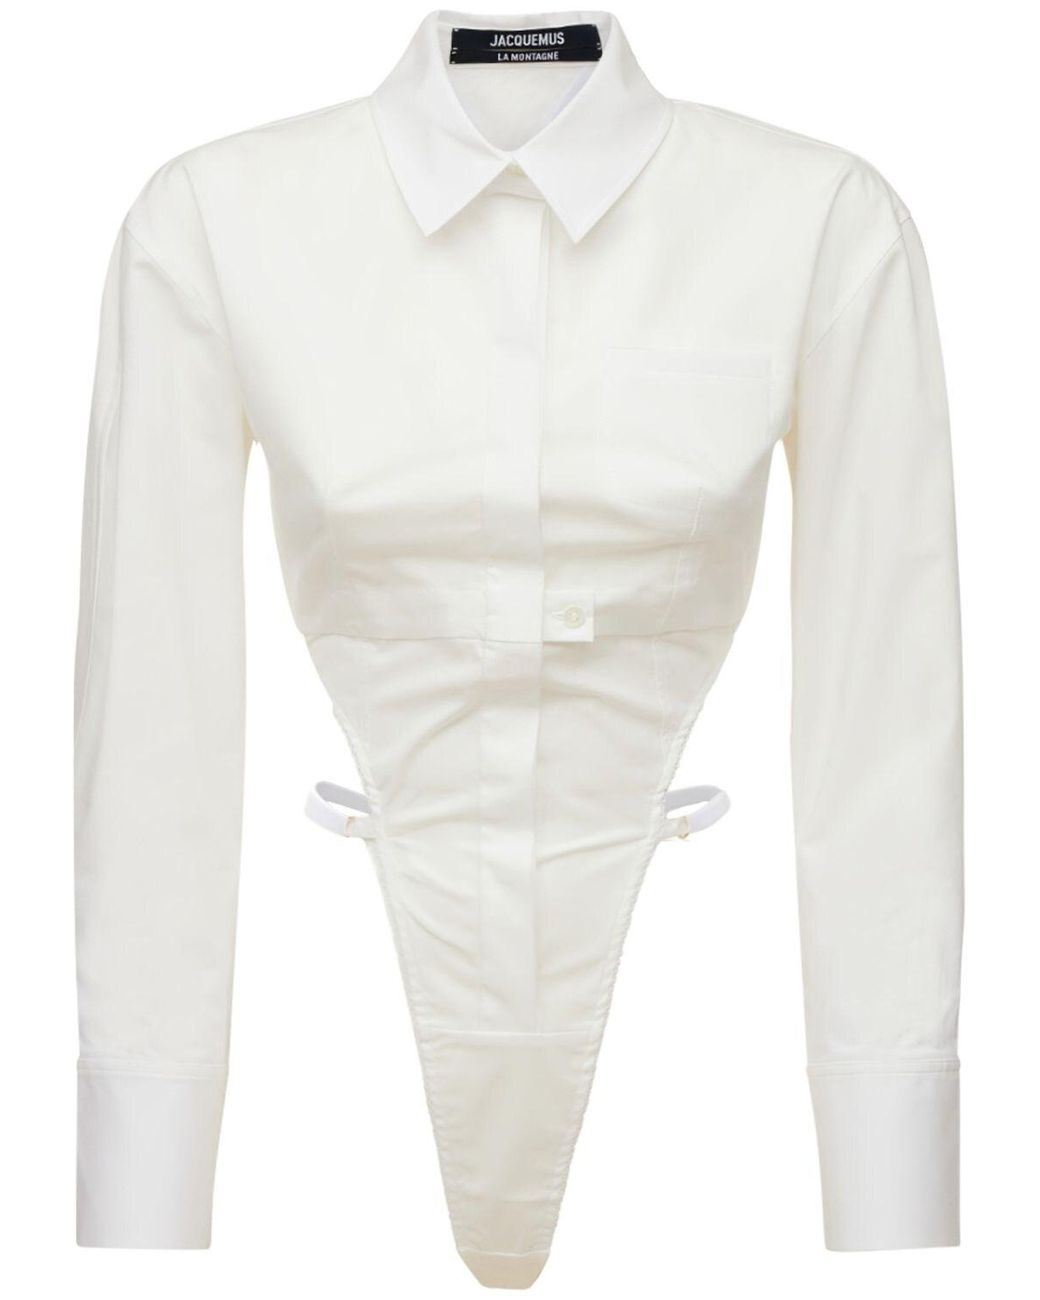 Jacquemus La Chemise Body Stretch Shirt Bodysuit in White | Lyst UK